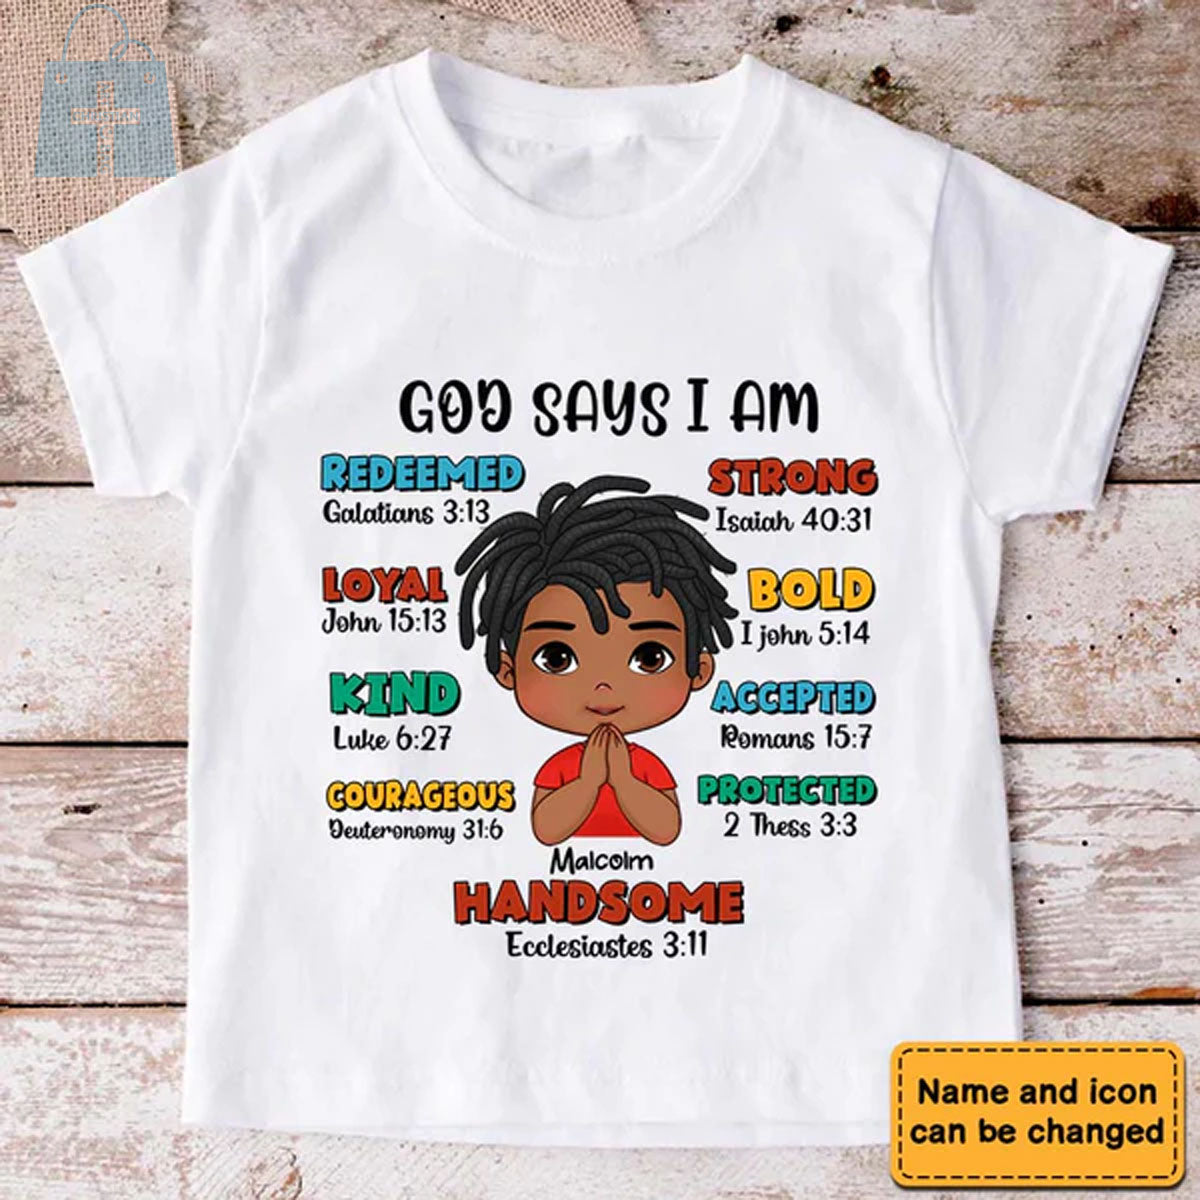 Christianartbag T-shirt, God Says Bible Verses T-Shirt, Children's Printed T-Shirts, CABTK03090923. - Christian Art Bag